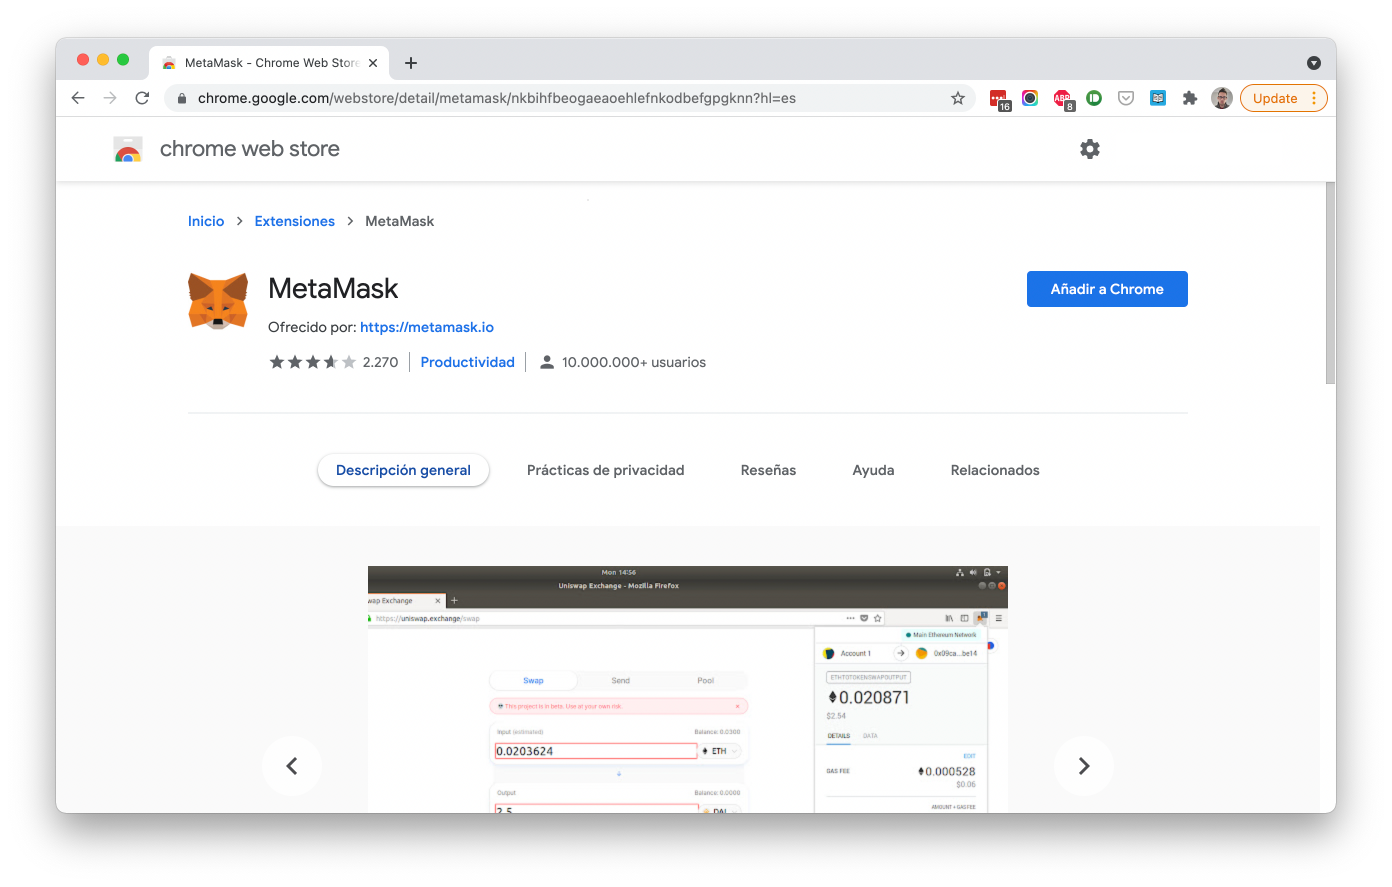 Chrome Web Store - MetaMask